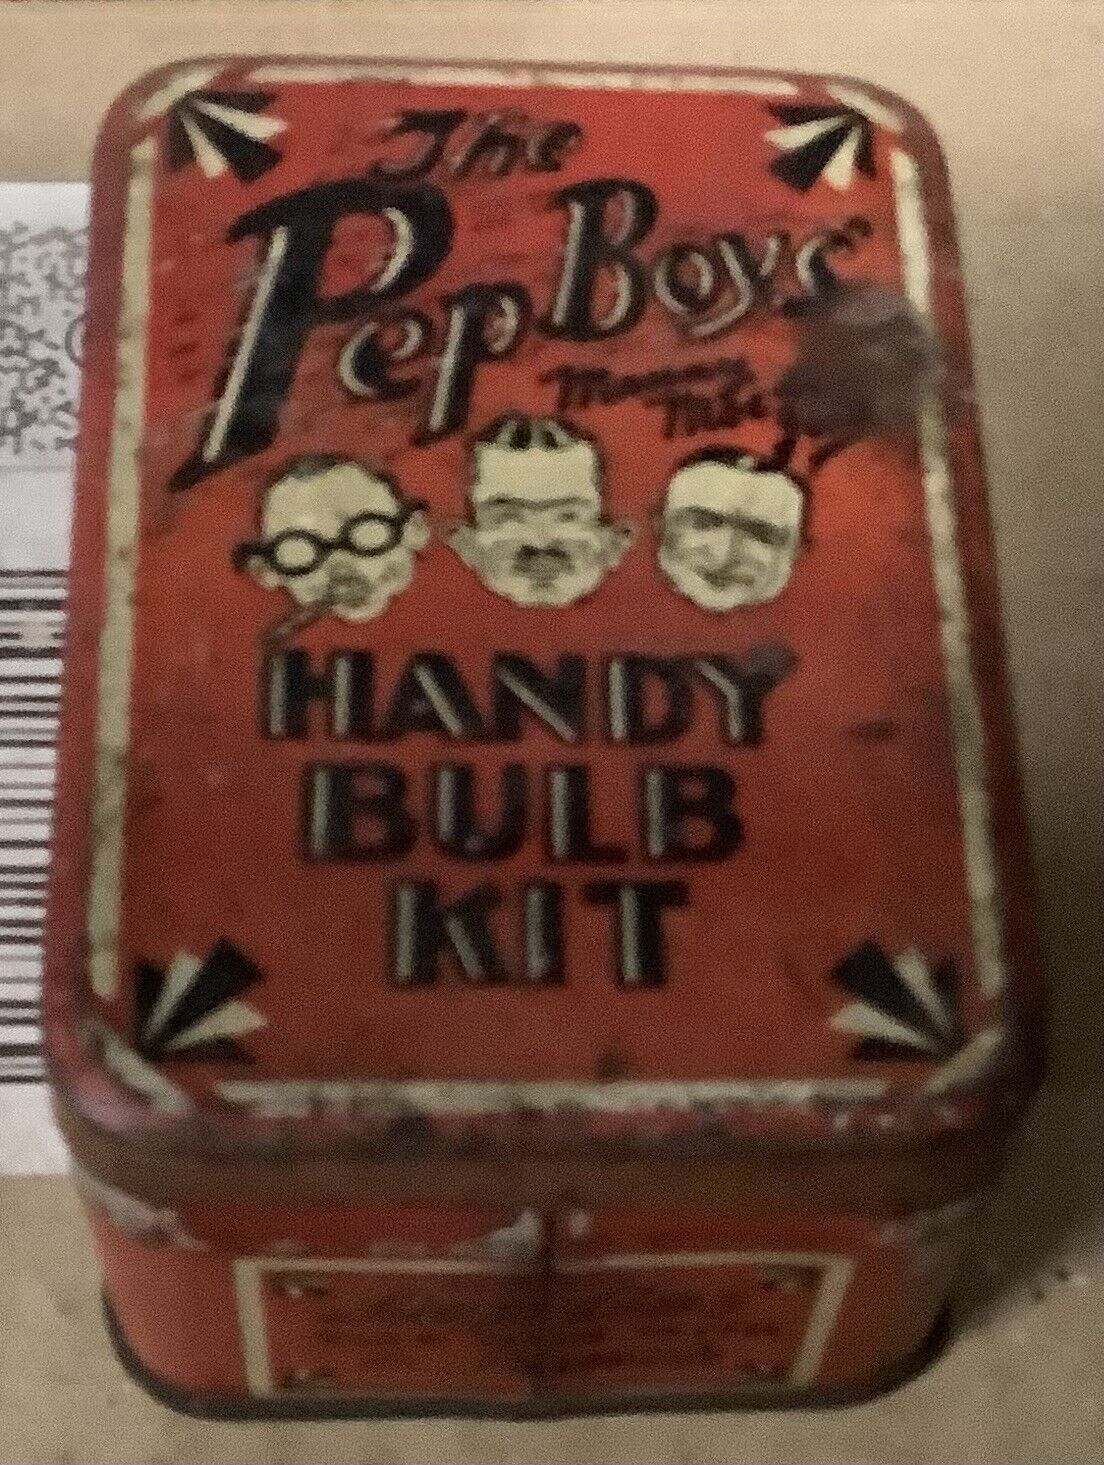 Original Pep Boys Handy Bulb Kit Motor Oil Can Metal Gas Sign Tires ~FULL~NOS~